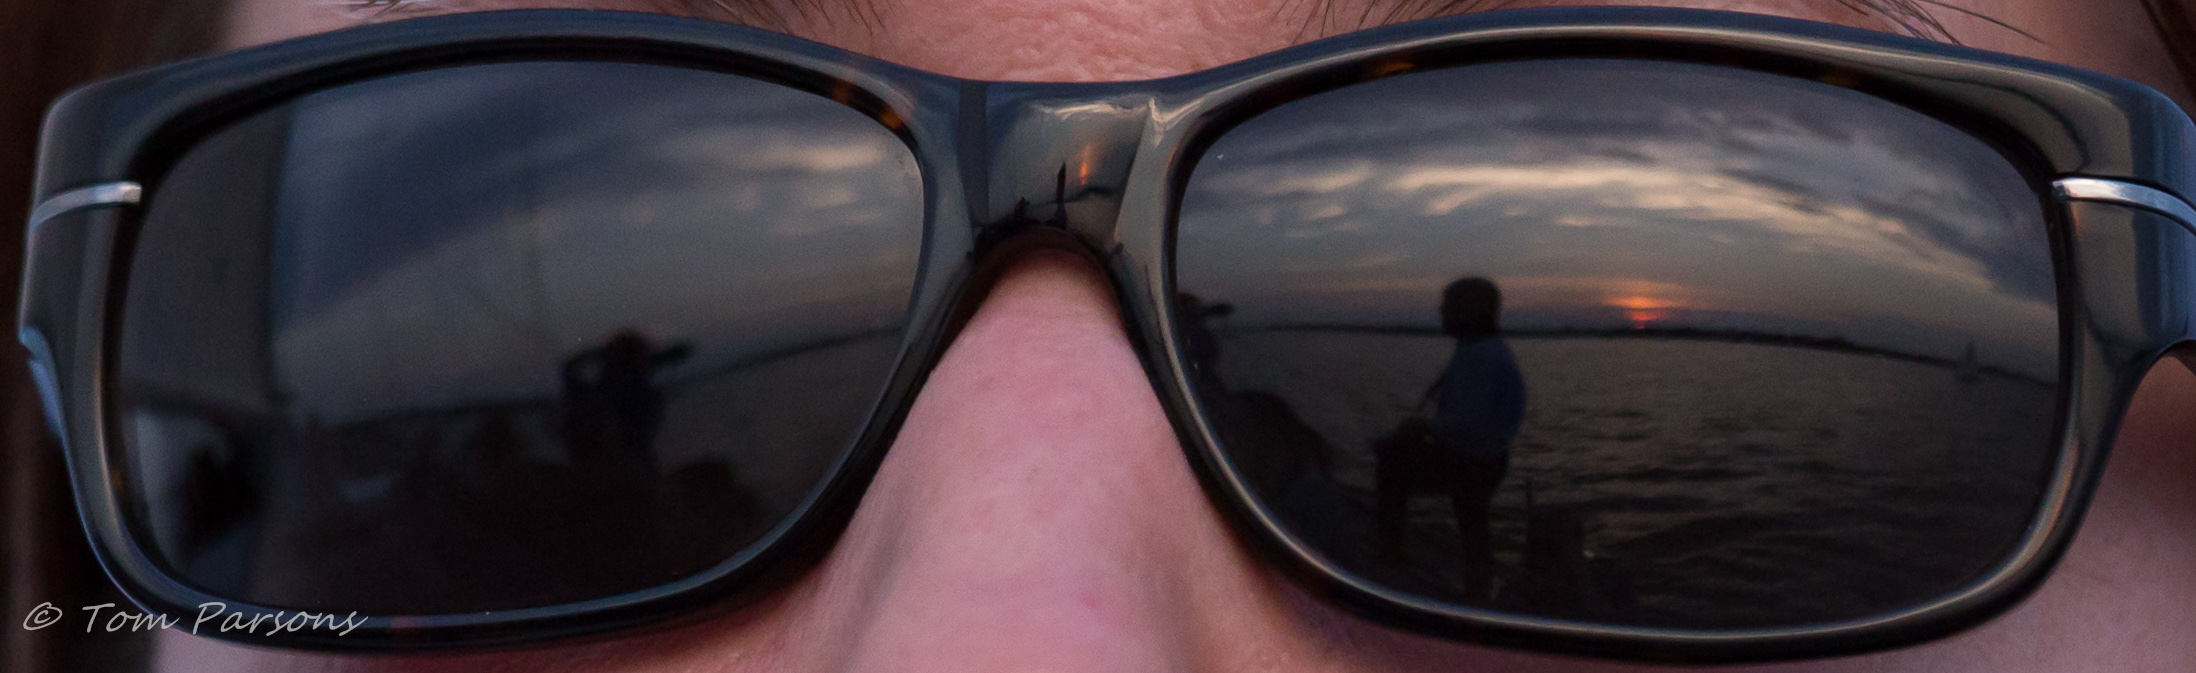 Sunglasses reflecting the sunset